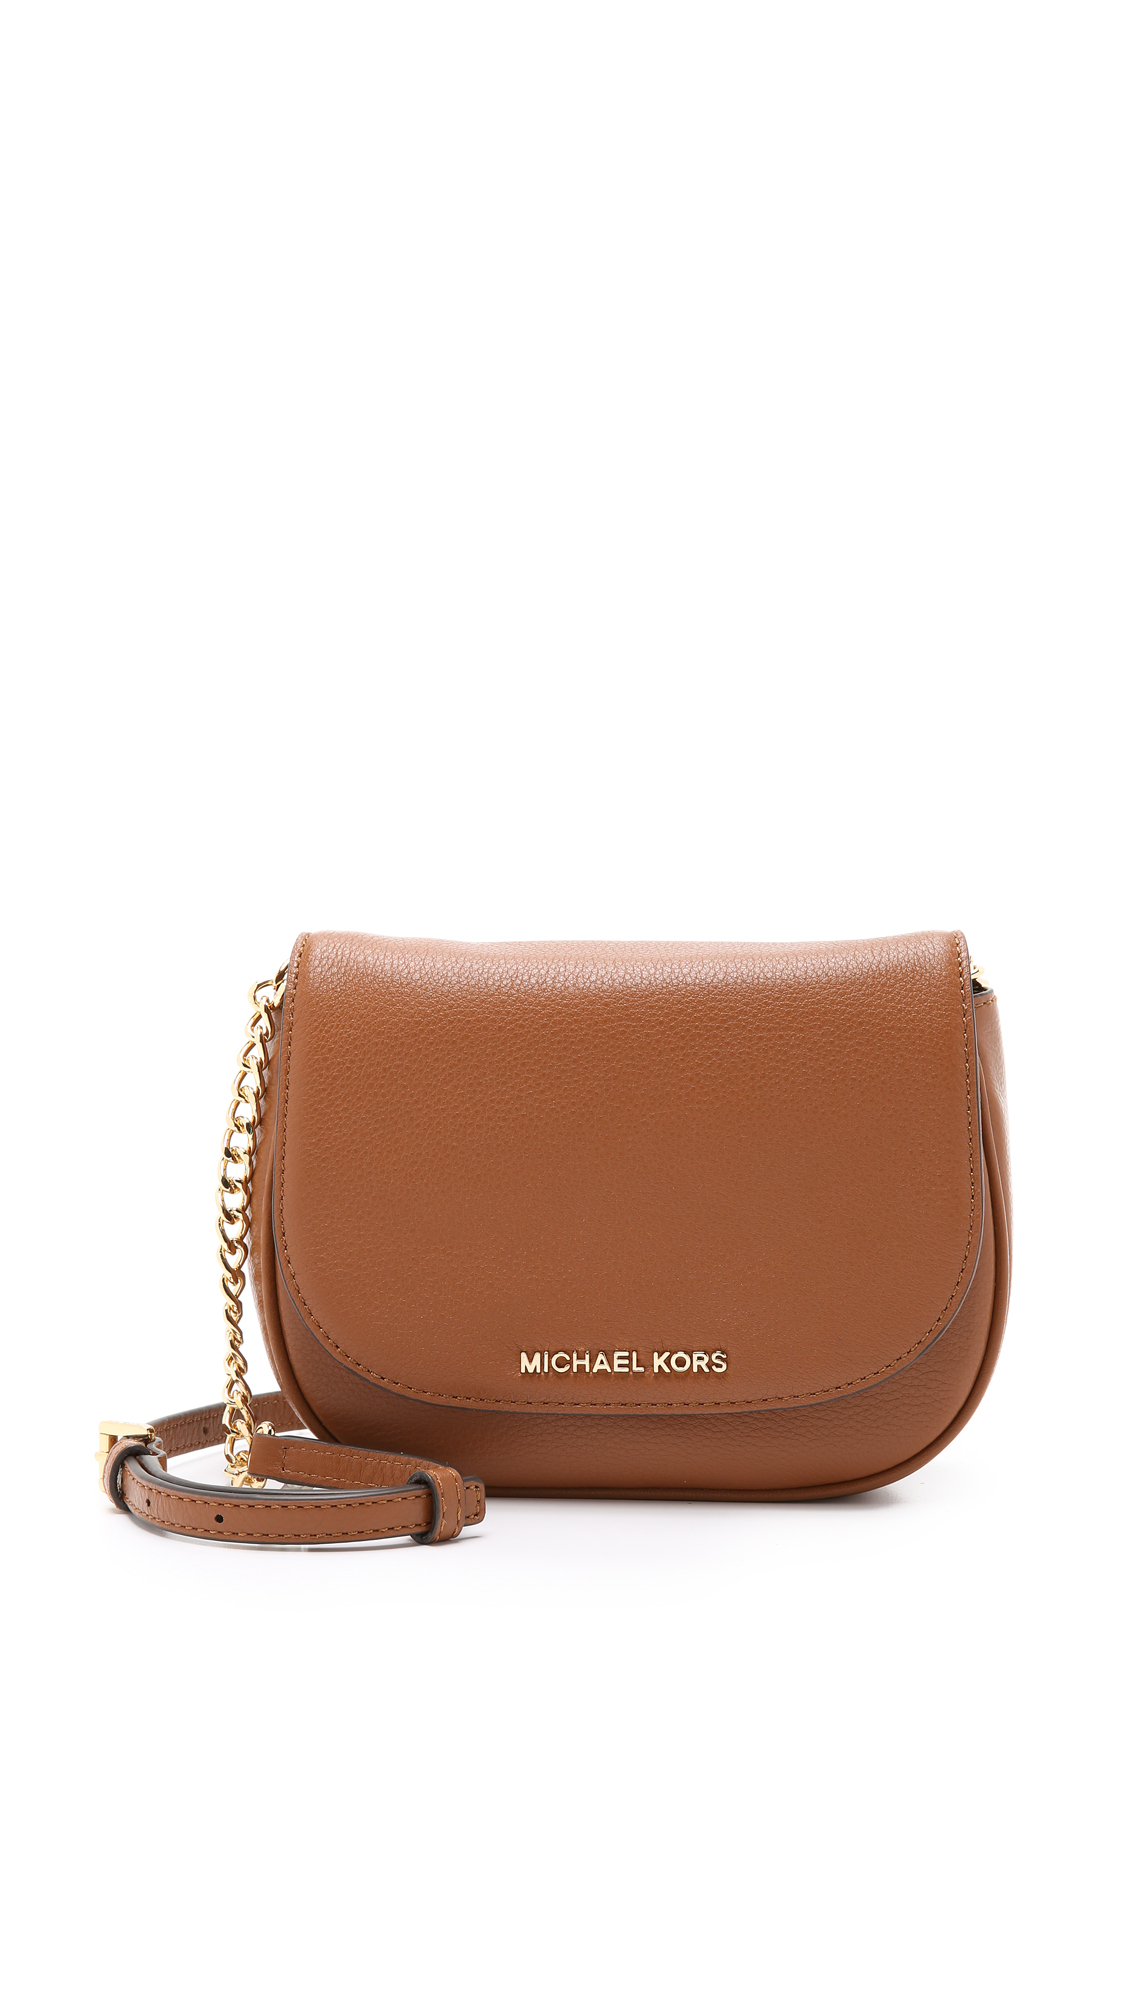 Michael Kors Bedford Signature Flat Cross-Body Bag for Women